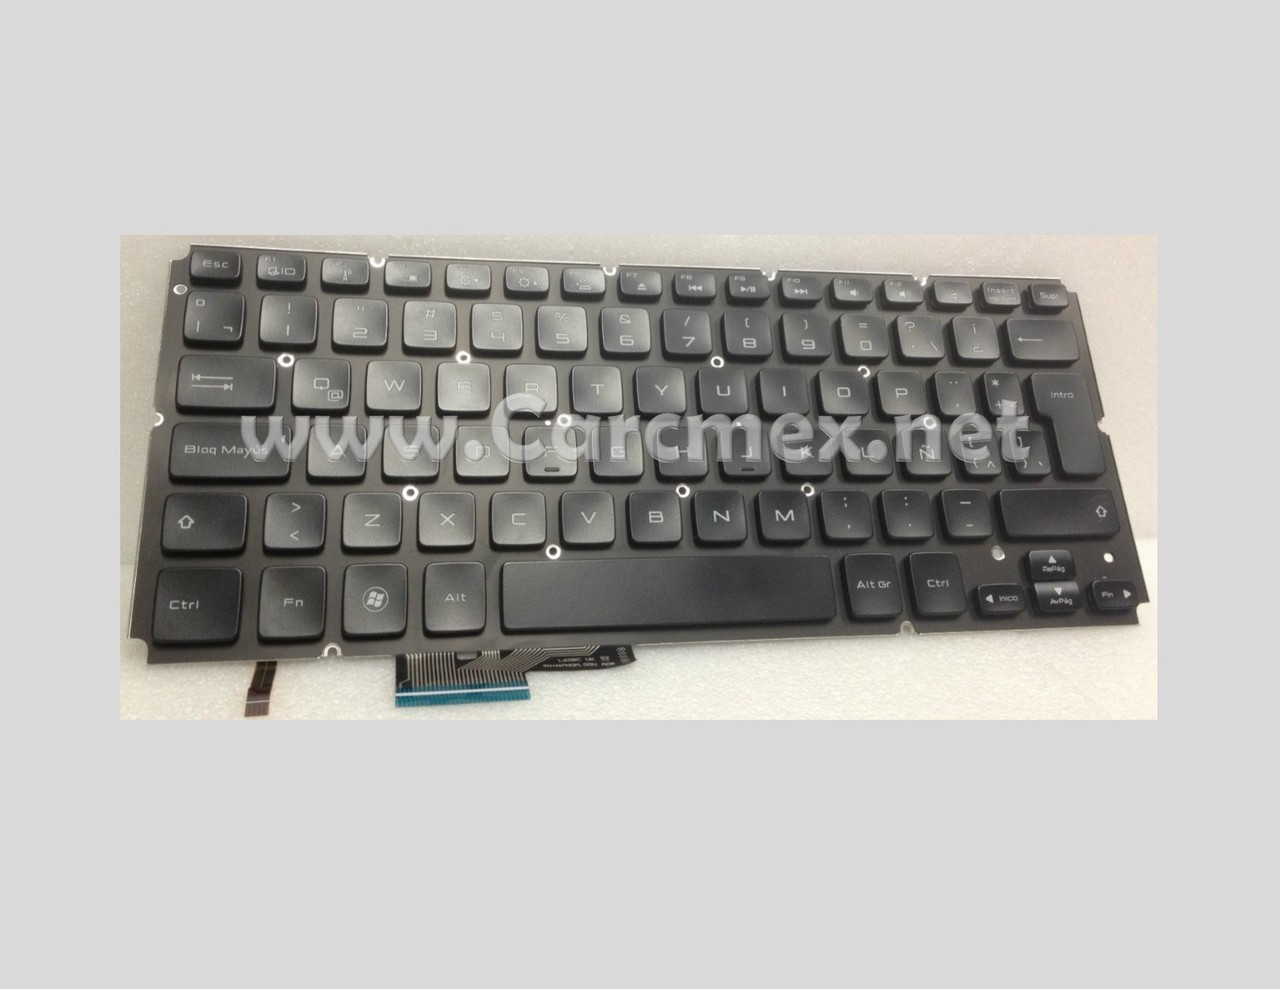 DELL XPS 14 L421X, 15 L521X Backlit Keyboard Spanish / Teclado Retro  Iluminado en Español NEW DELL J8CVV, 8Y5K0 - CARCMEX